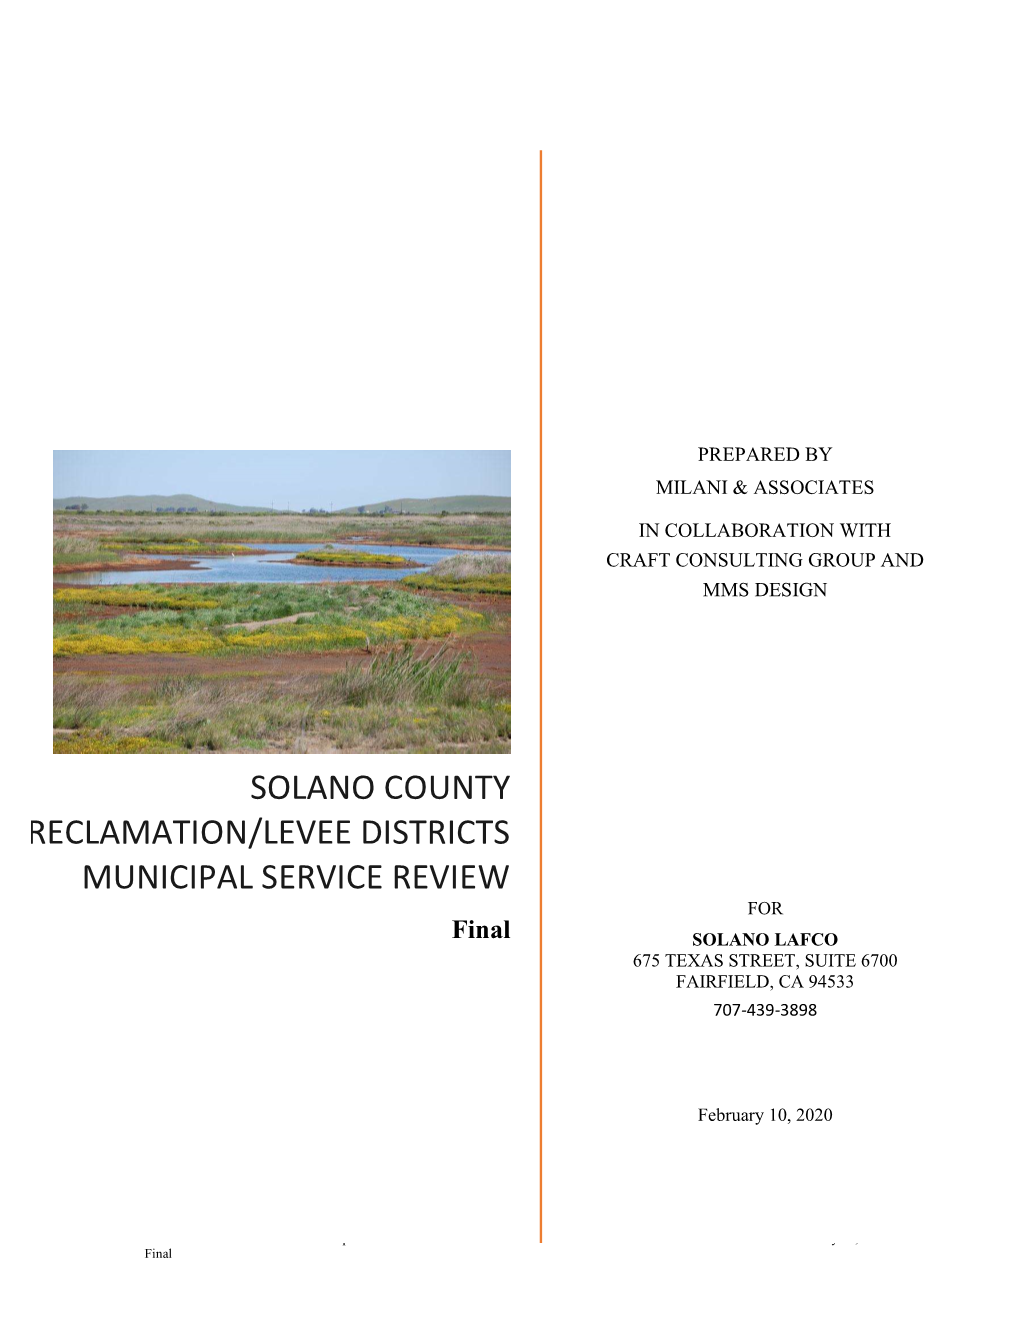 Reclamation/Levee District Municipal Service Review Public Comment Log # Commenter/Agency Date Page/Section Comment Response